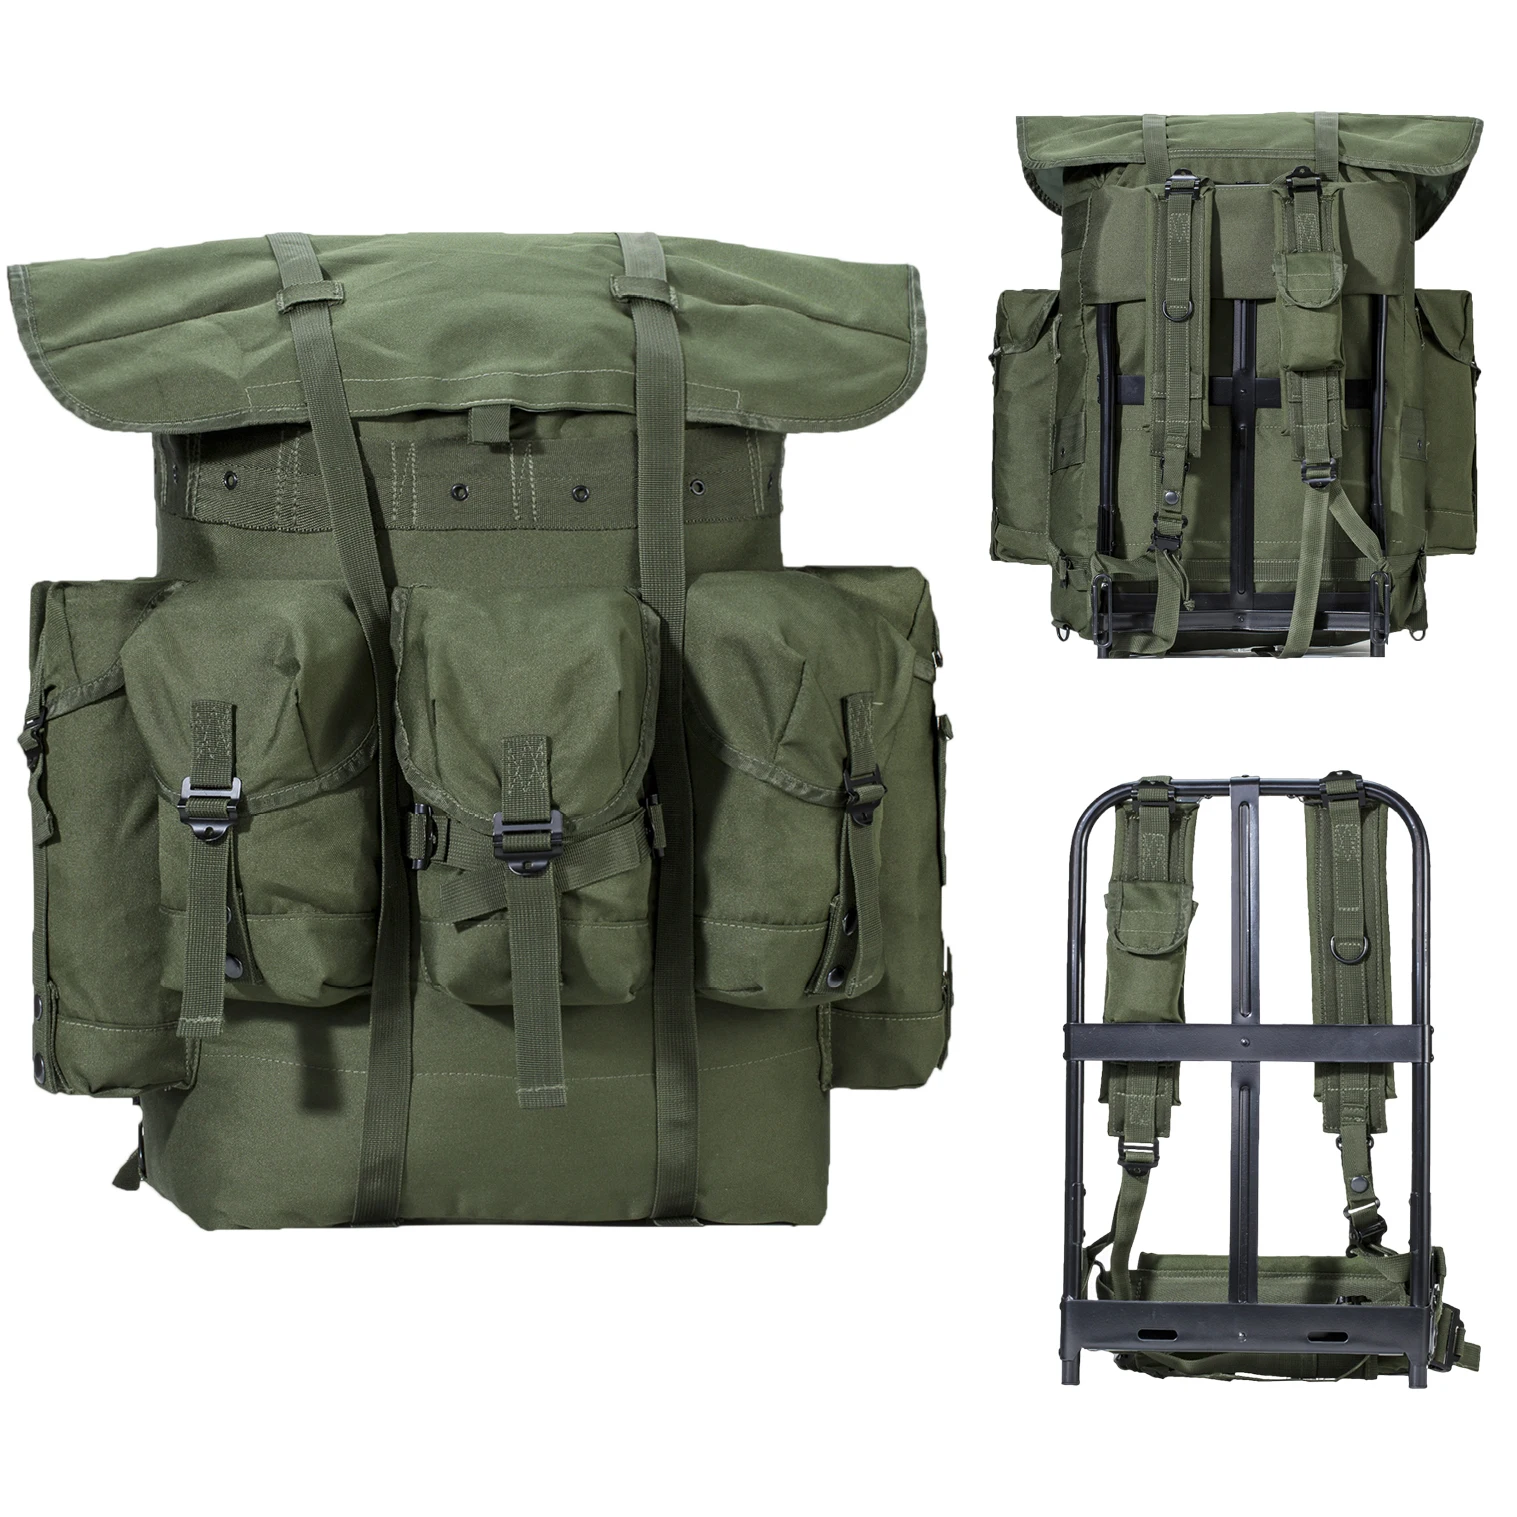 Austrian Olive Drab ALICE Rucksack Army Surplus Backpack Bag Hiking Bushcraft 